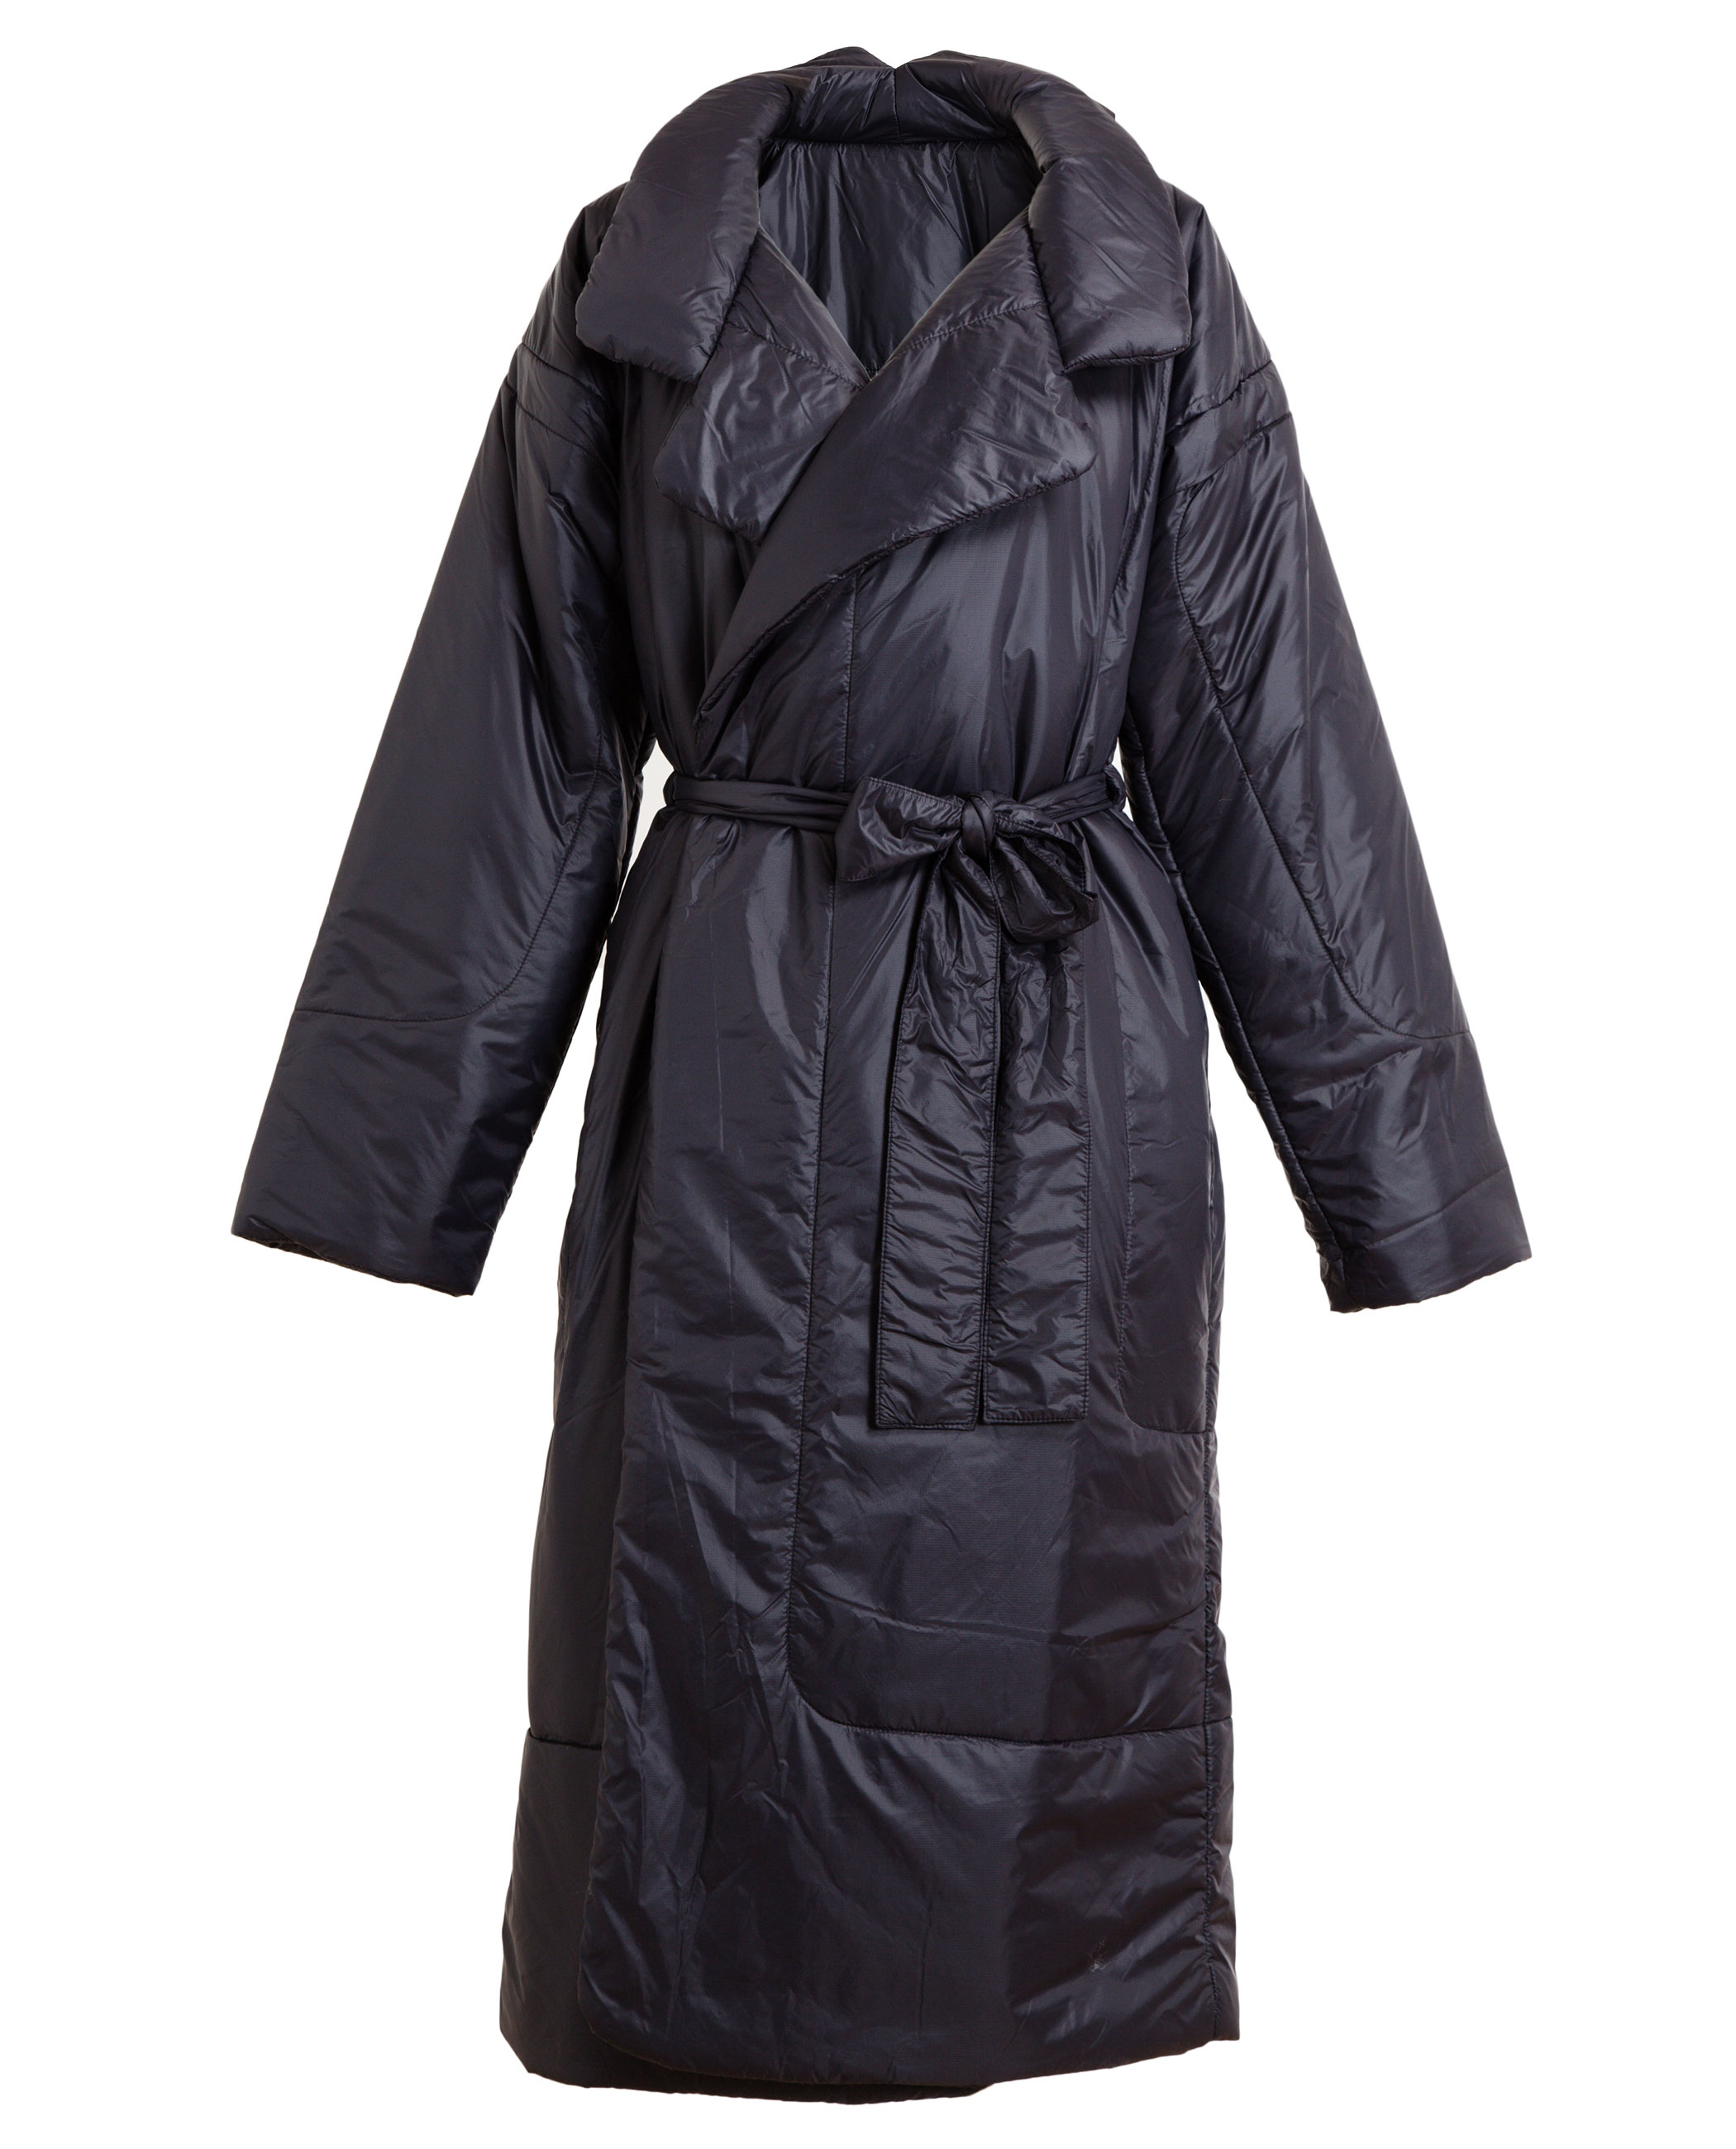 Lyst - Norma Kamali Reversible Sleeping Bag Long Coat in Black